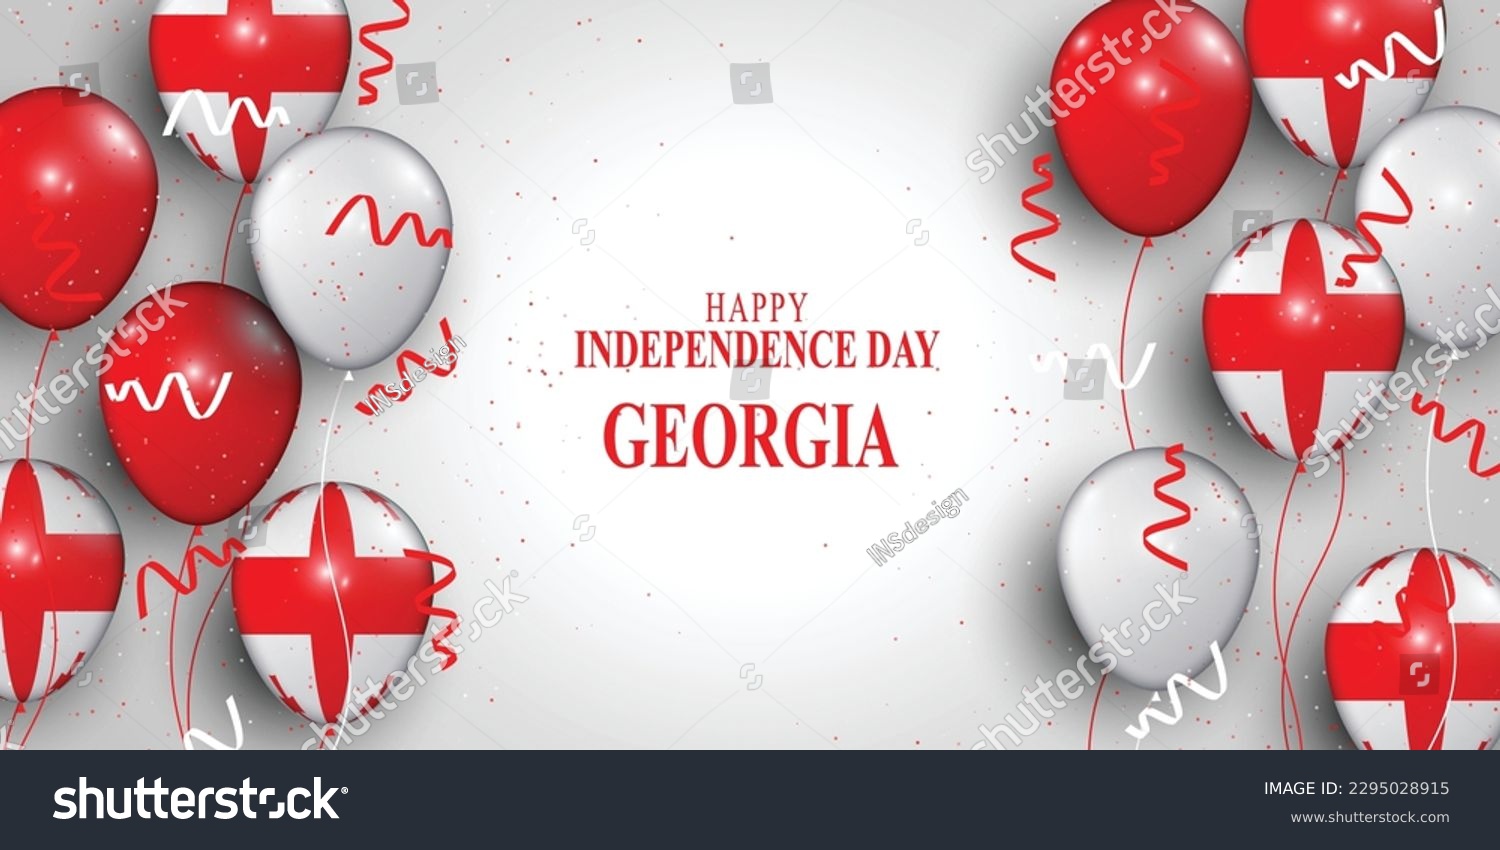 SVG of Georgia Independence Day background. Federal, Civic, Historical. Vector illustration. svg